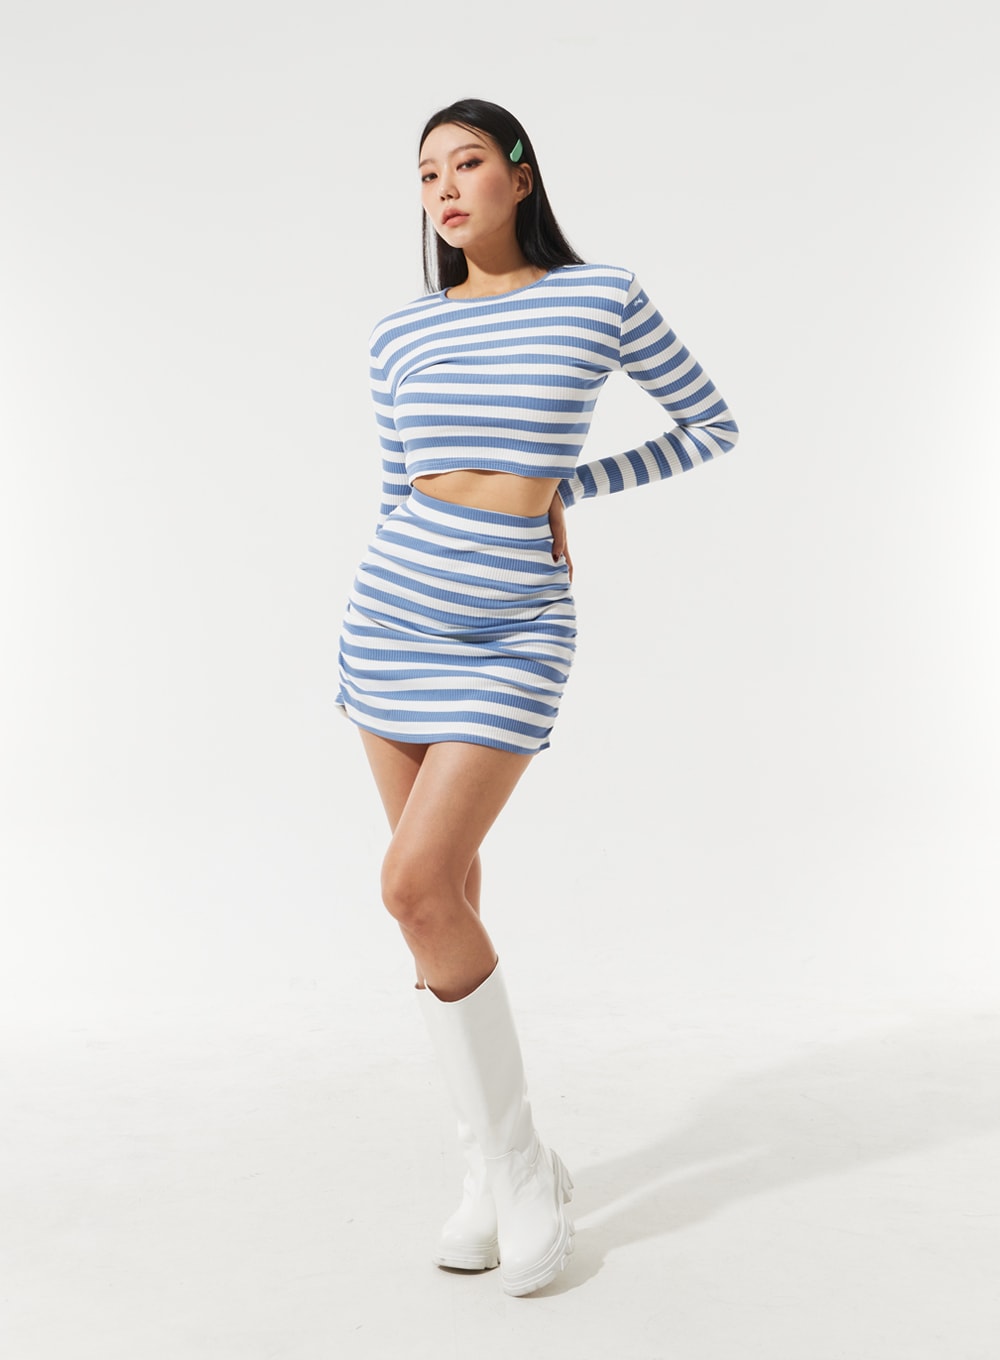 Stripe Top And Skirt Set IM329